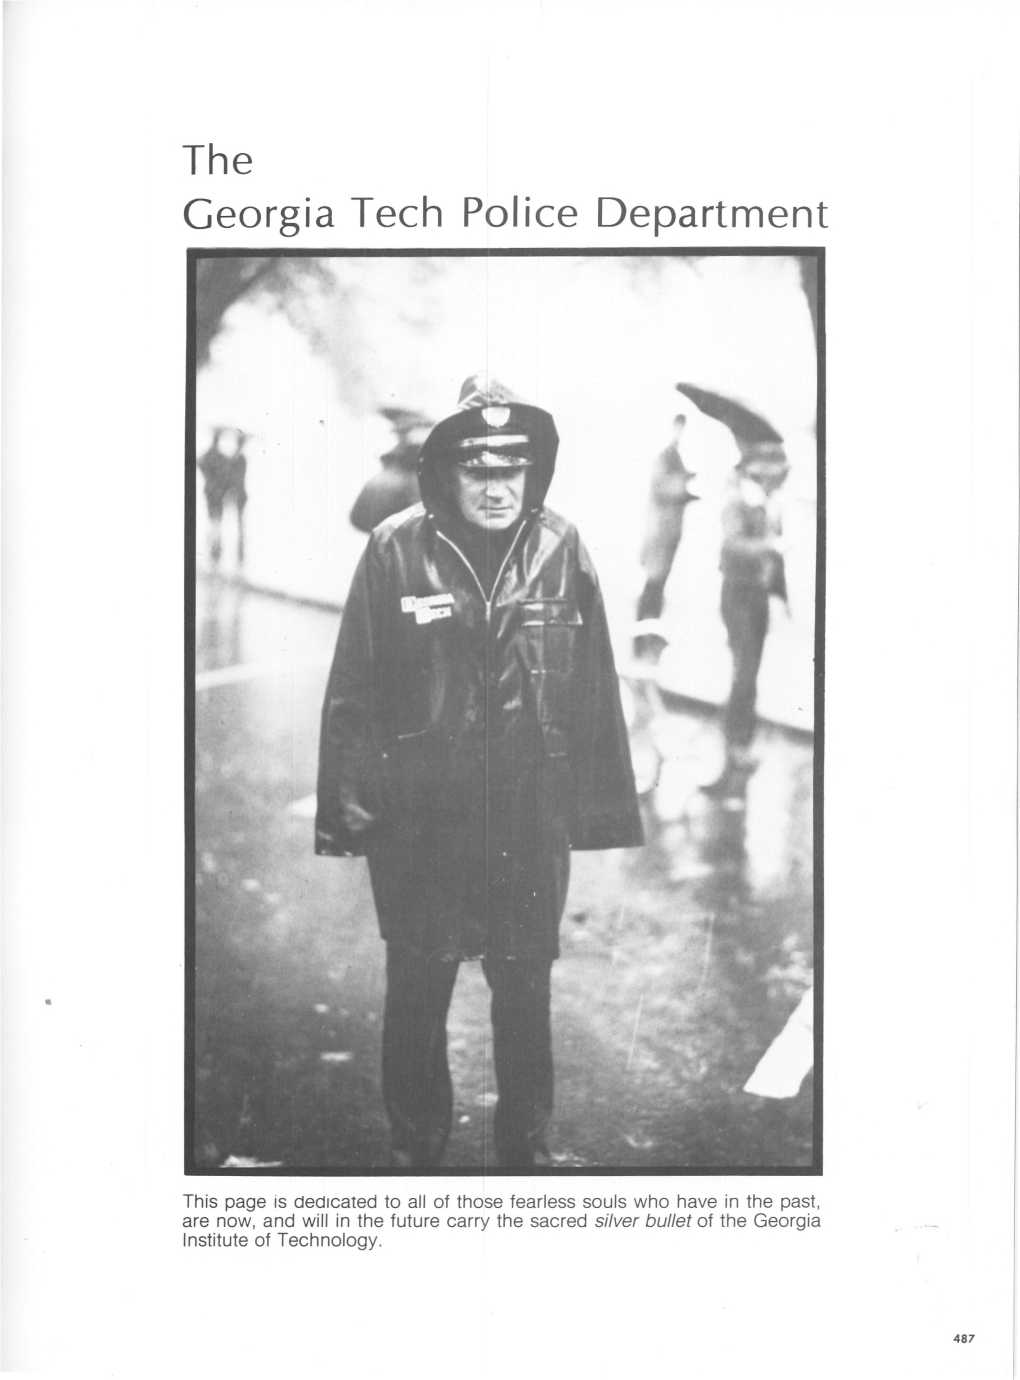 The Georgia Tech Police Department